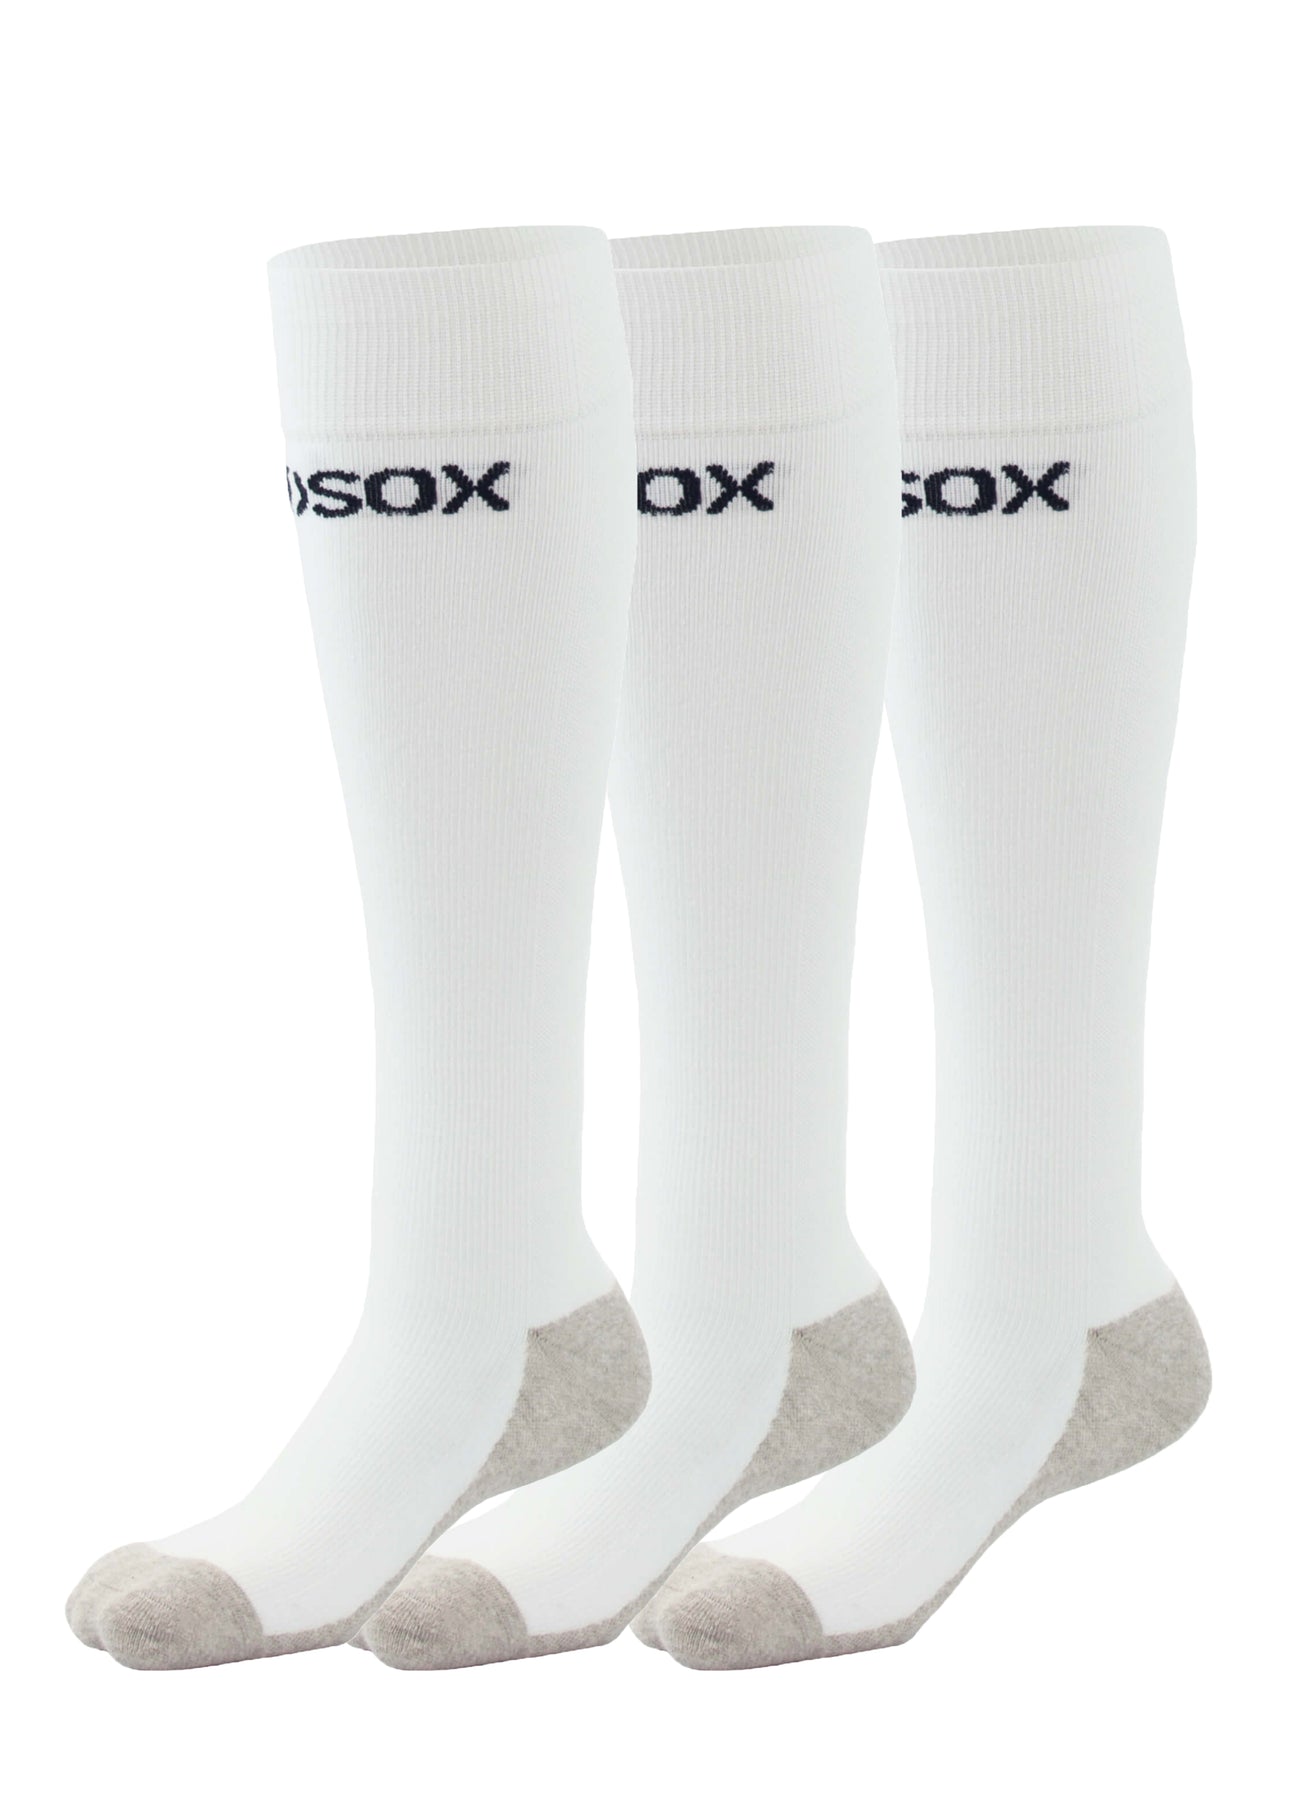 Sealox 20 - 30 mmHg Graduated Calf Compression Sleeves for Women & Men - 1  pair - Sealox Health Premium Socks, Sleeves